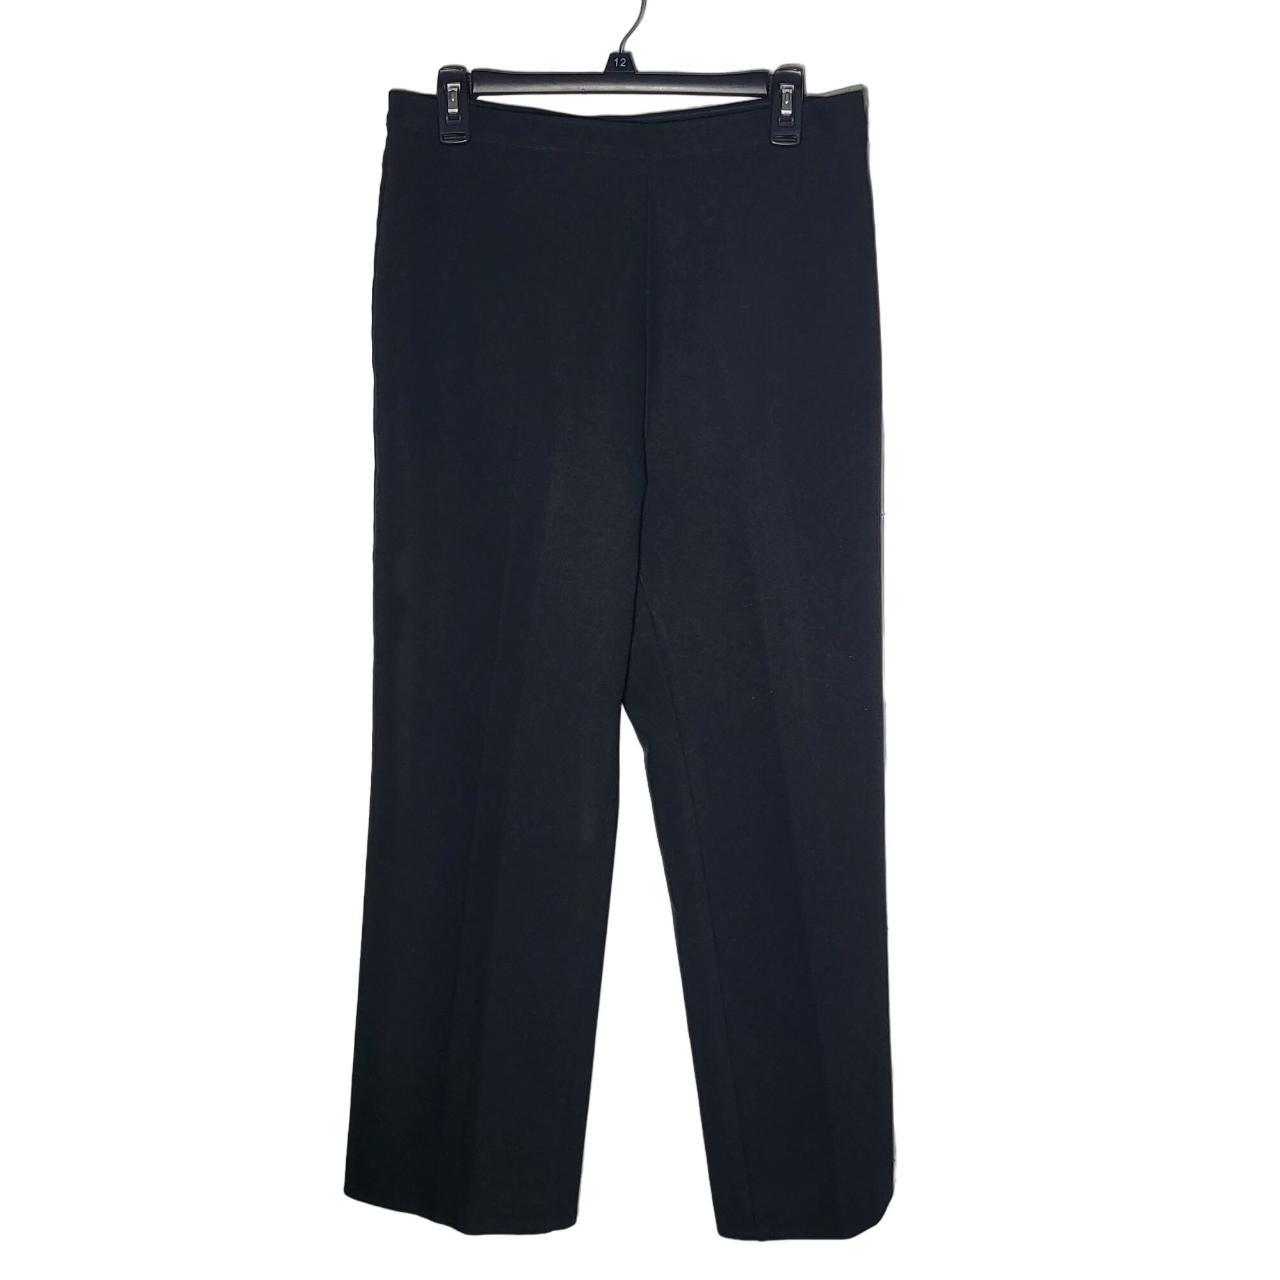 Vintage Levi's Women's Black Pants Slacks Size:... - Depop